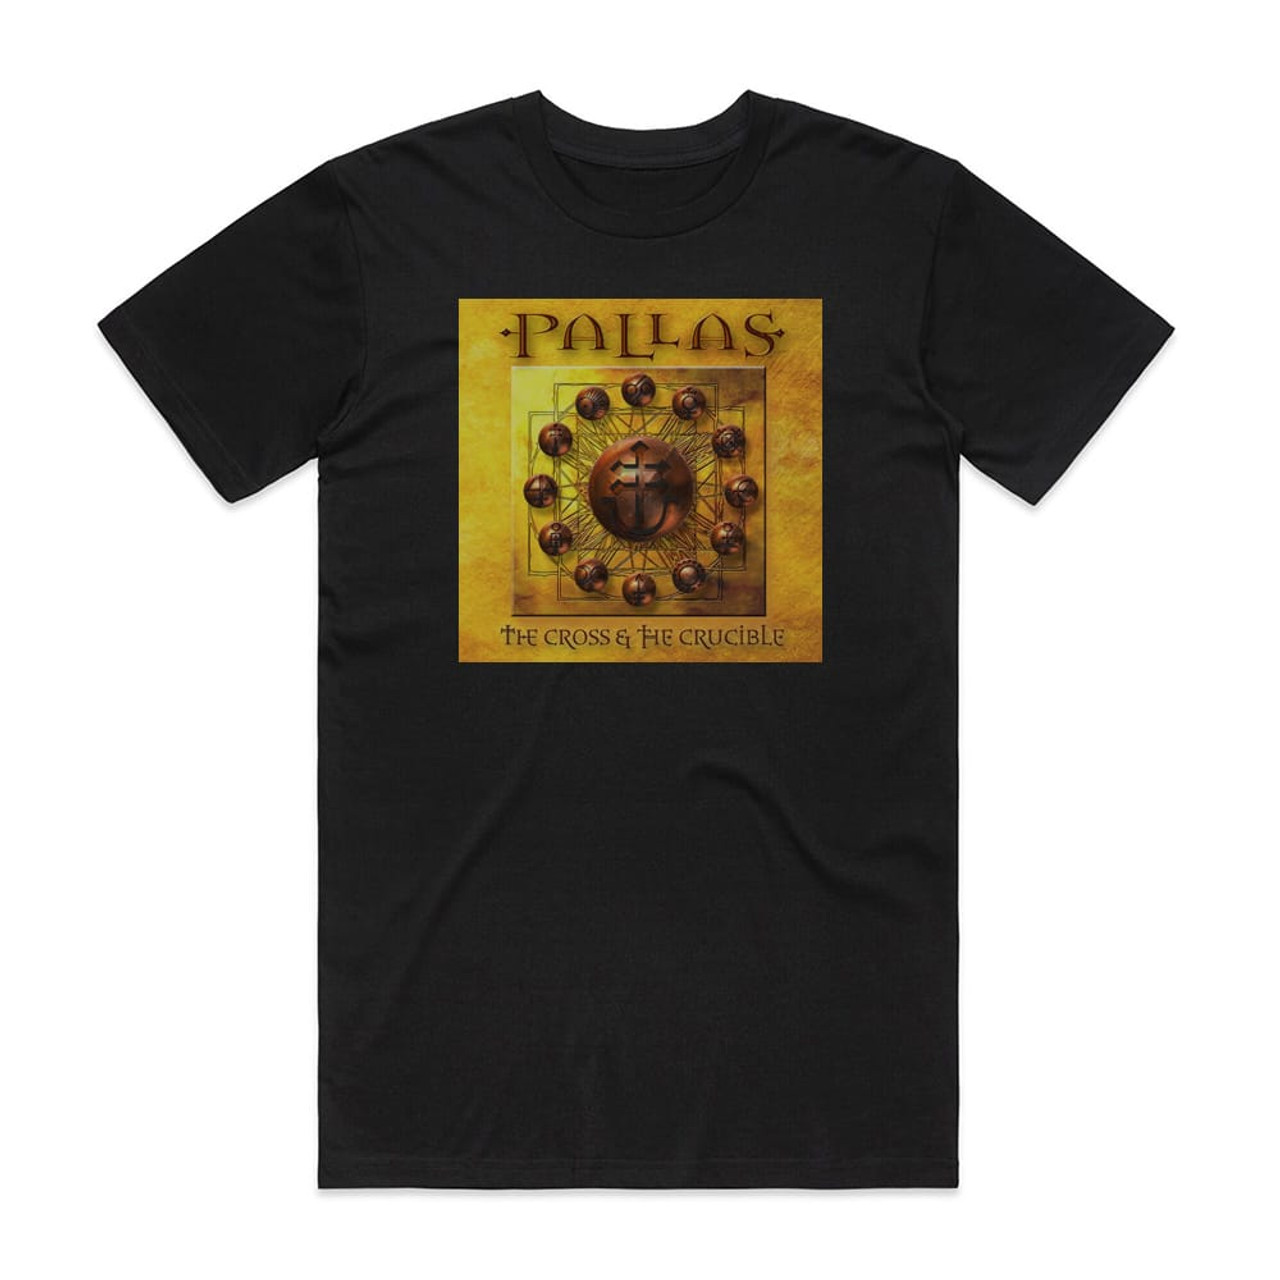 Pallas The Cross The Crucible Album Cover T-Shirt Black